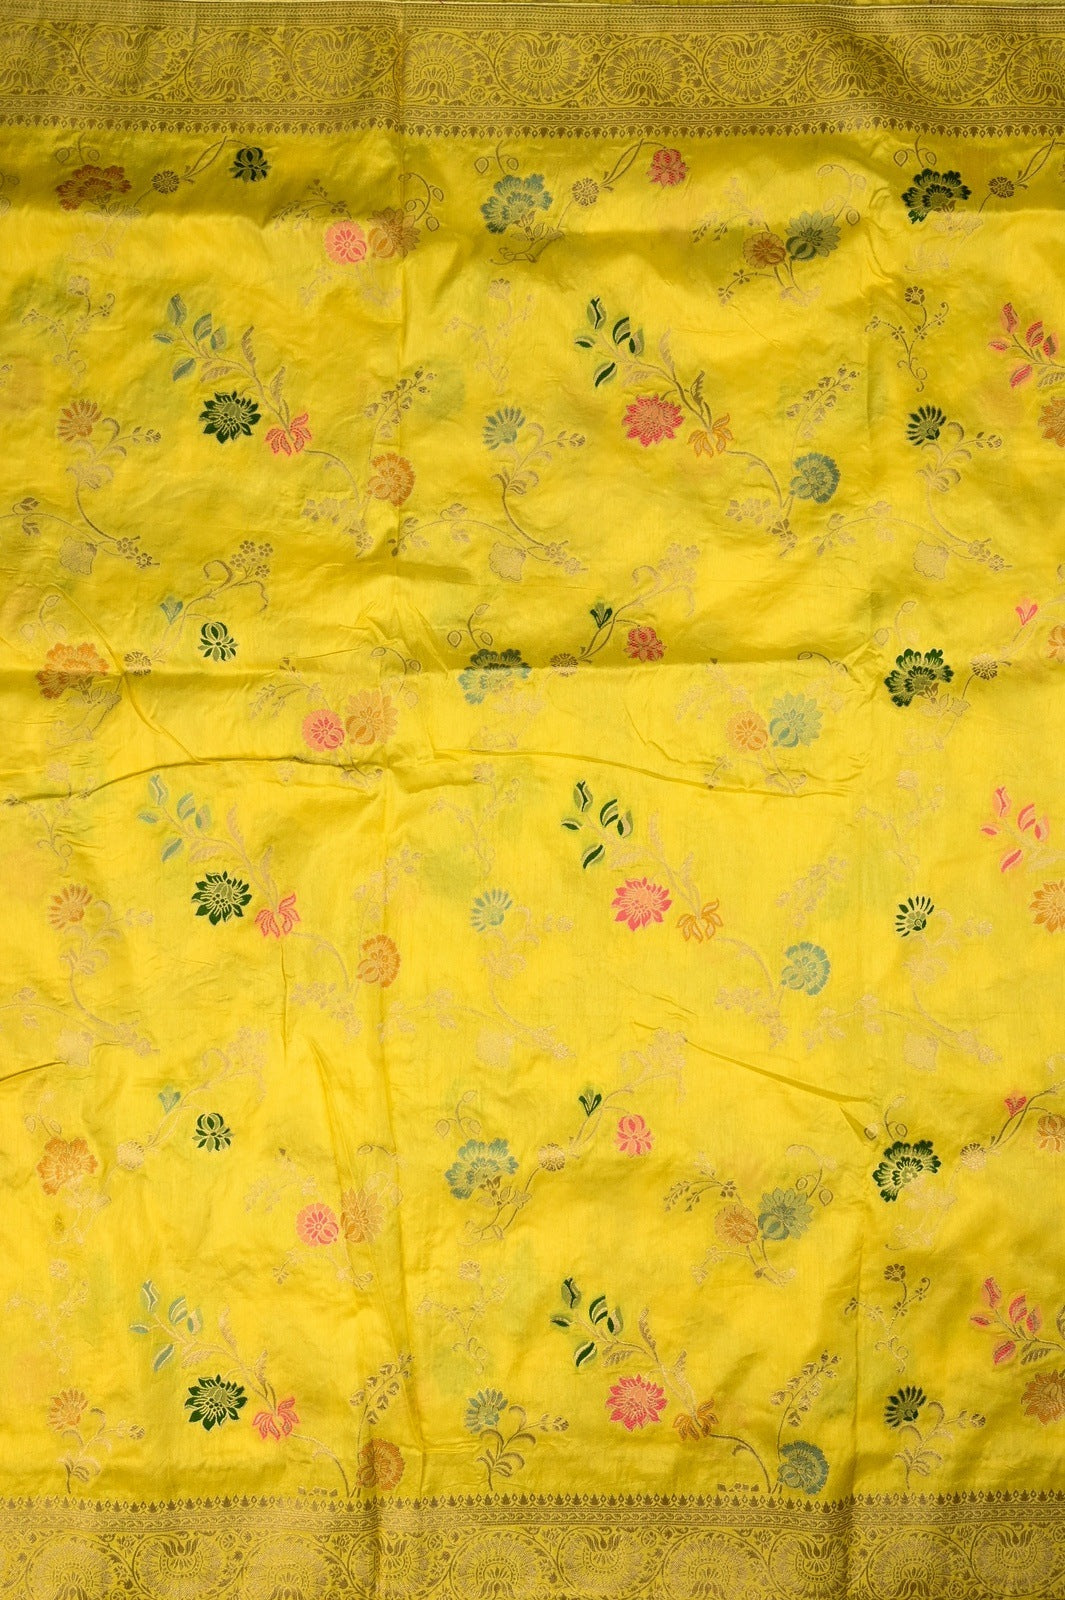 Dola silk saree light yellow color with allover zari work, rich pallu, small zari border and running plain blouse.